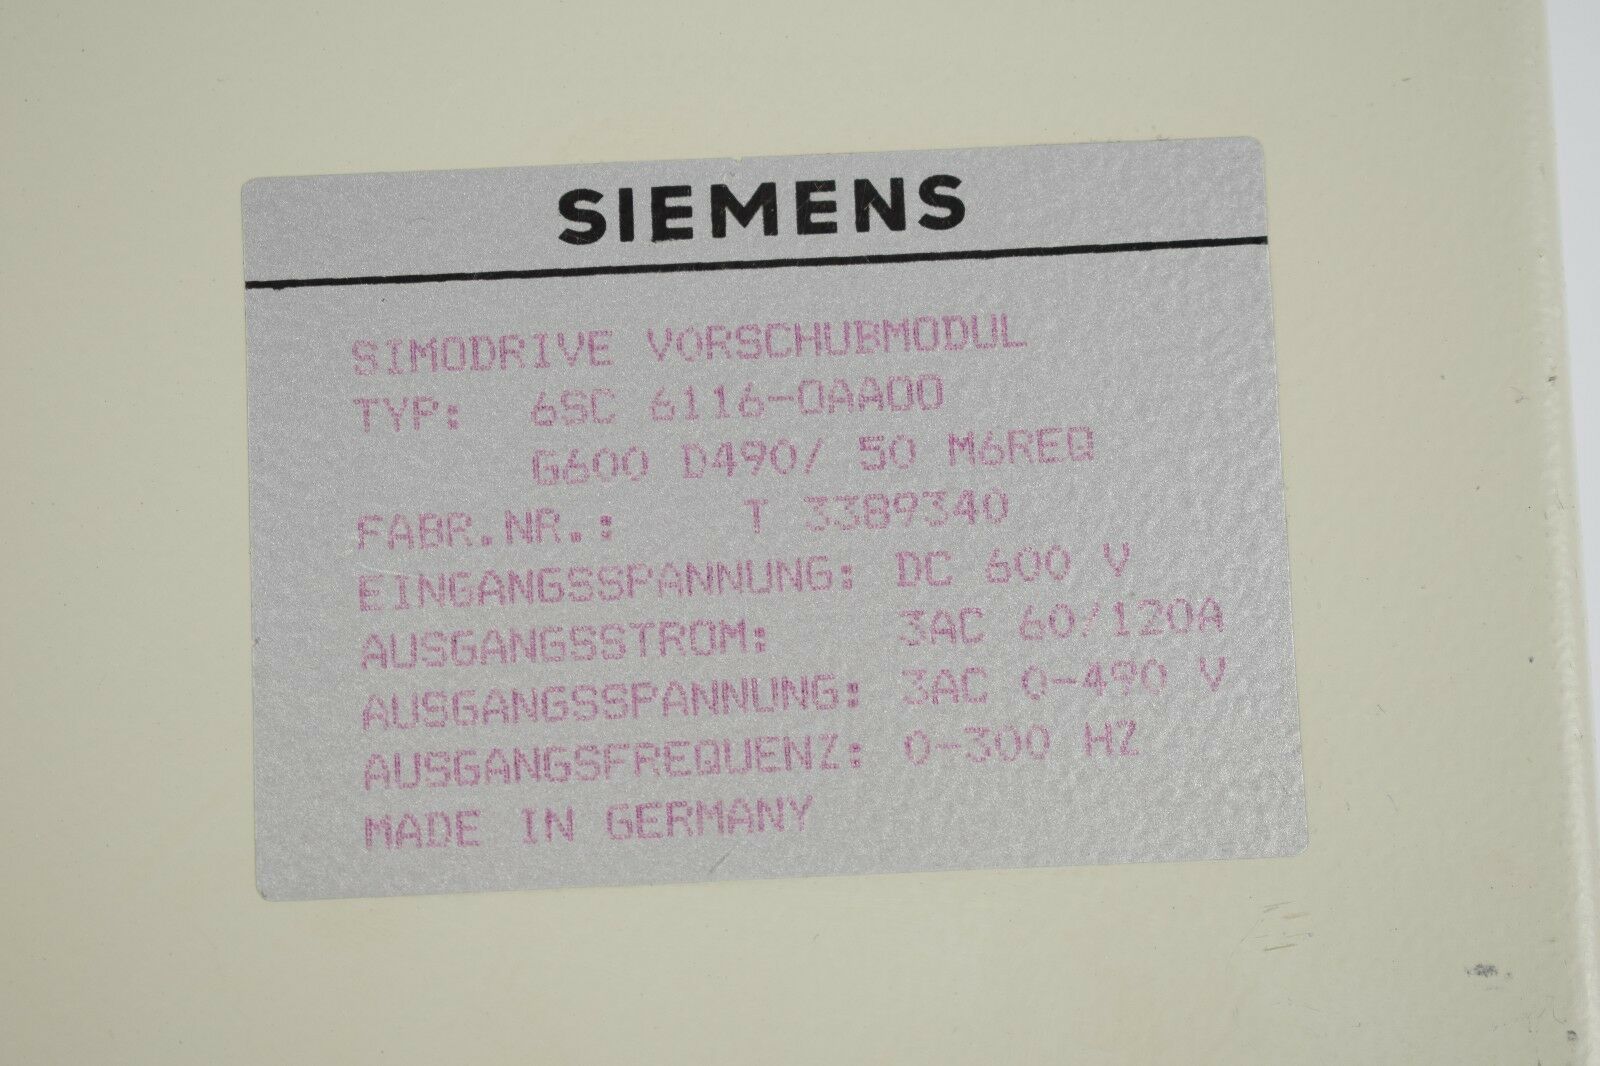 Siemens Simodrive Vorschubmodul 6SC 6116-0AA00 ( 6SC6116-0AA00 )